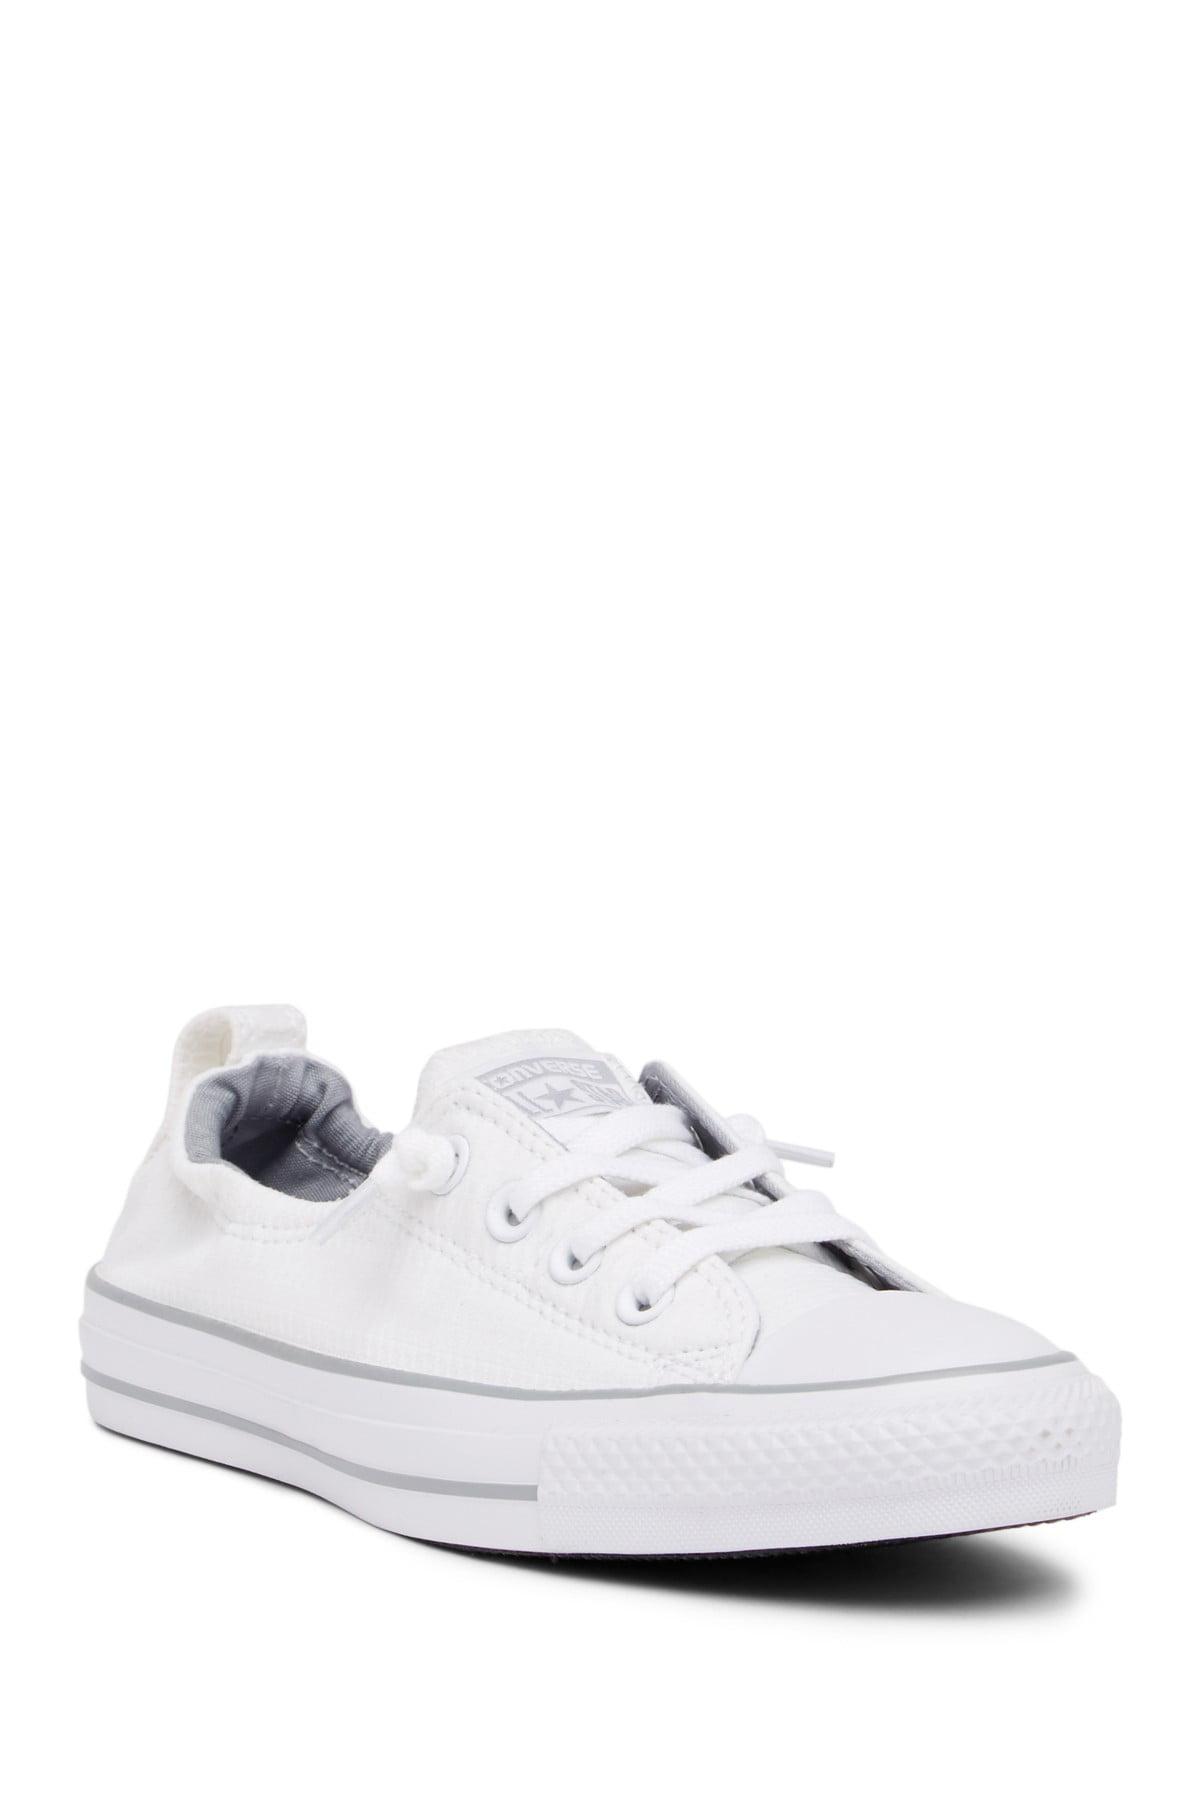 Converse Chuck Taylor All Star Shoreline Slip-on Oxford Sneaker in White |  Lyst